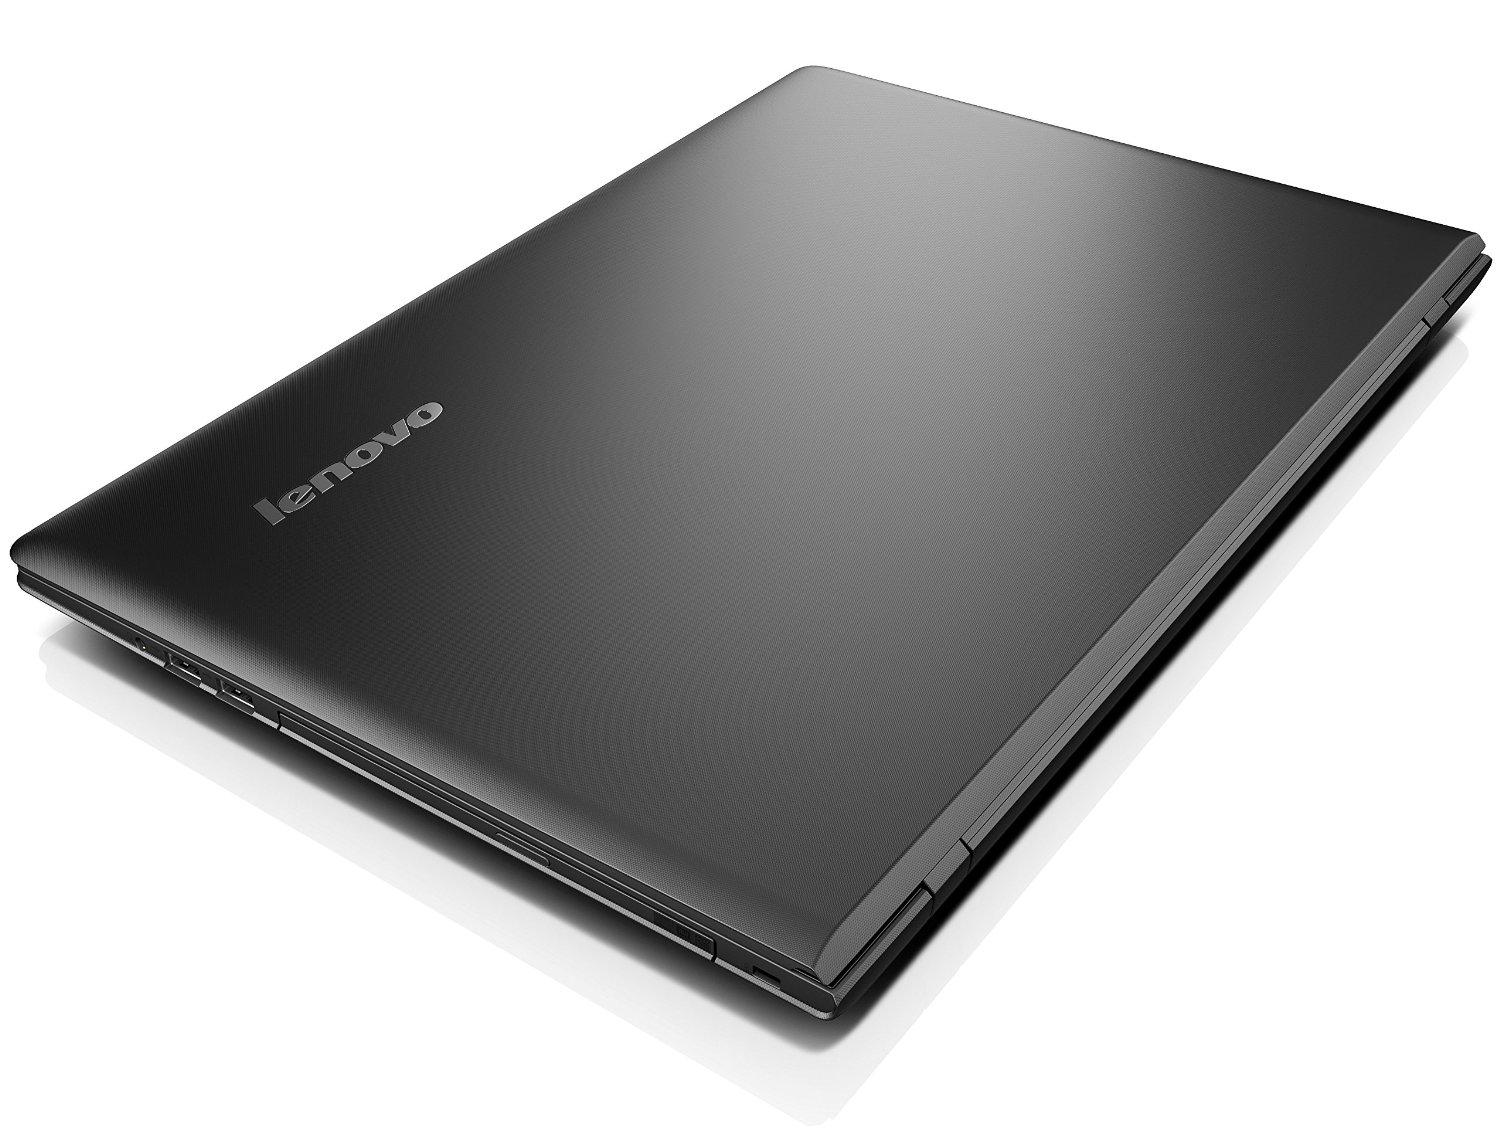 Lenovo Ideapad 300 15.6-Inch HD Laptop (Black) - (Intel Core i7-6500U, 8 GB RAM, 1 TB HDD, Intel HD Graphics Card, Windows 10)